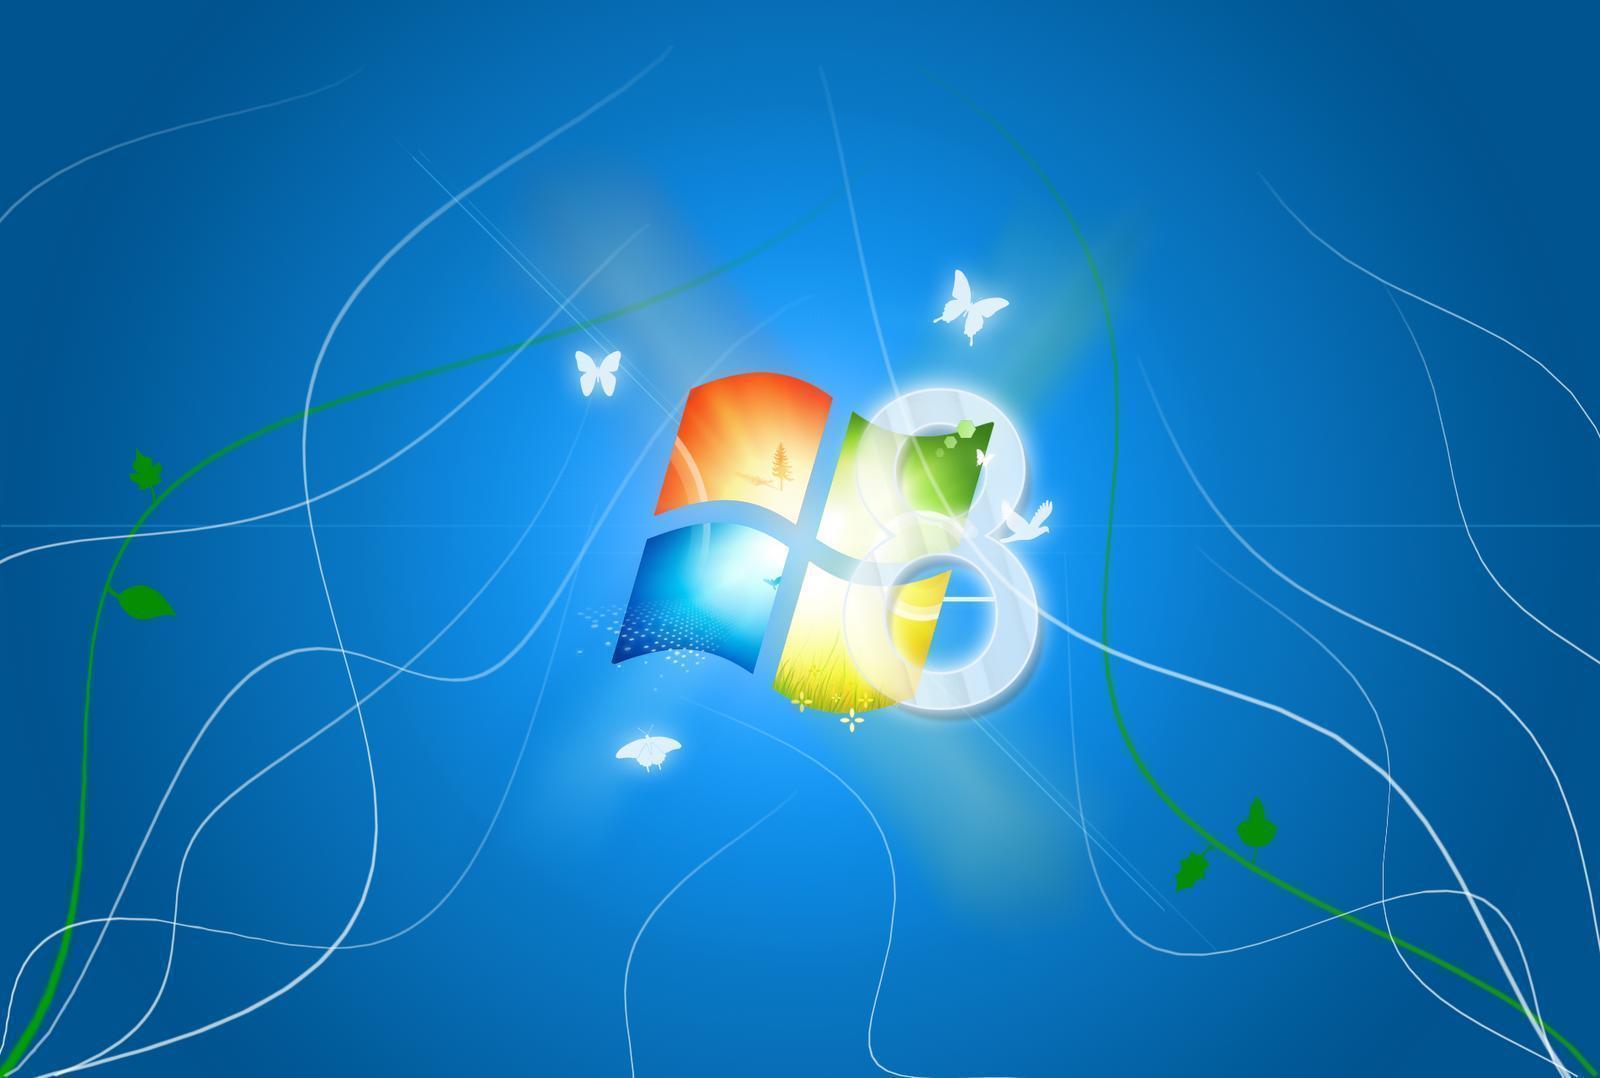 Windows 8 Desktop Background Wallpaper